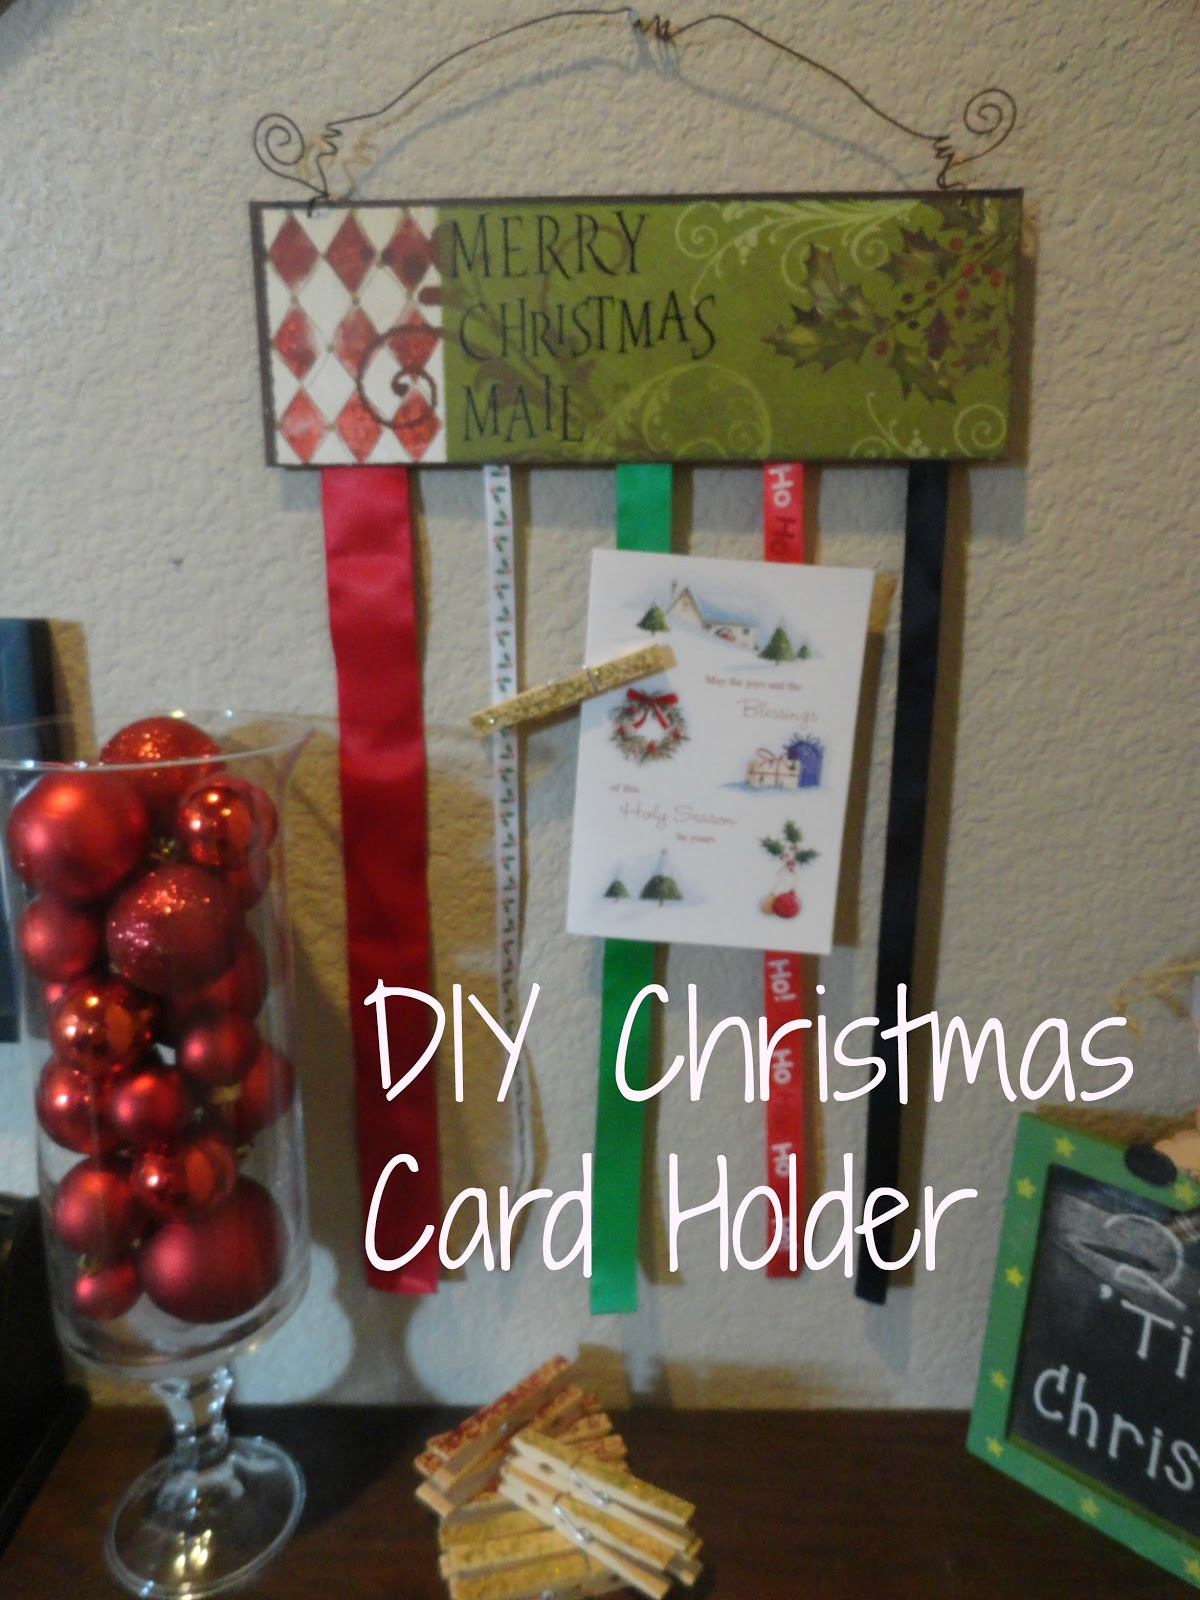 Christmas Card Holder DIY
 So I Saw This Tutorial DIY Christmas Card Holder